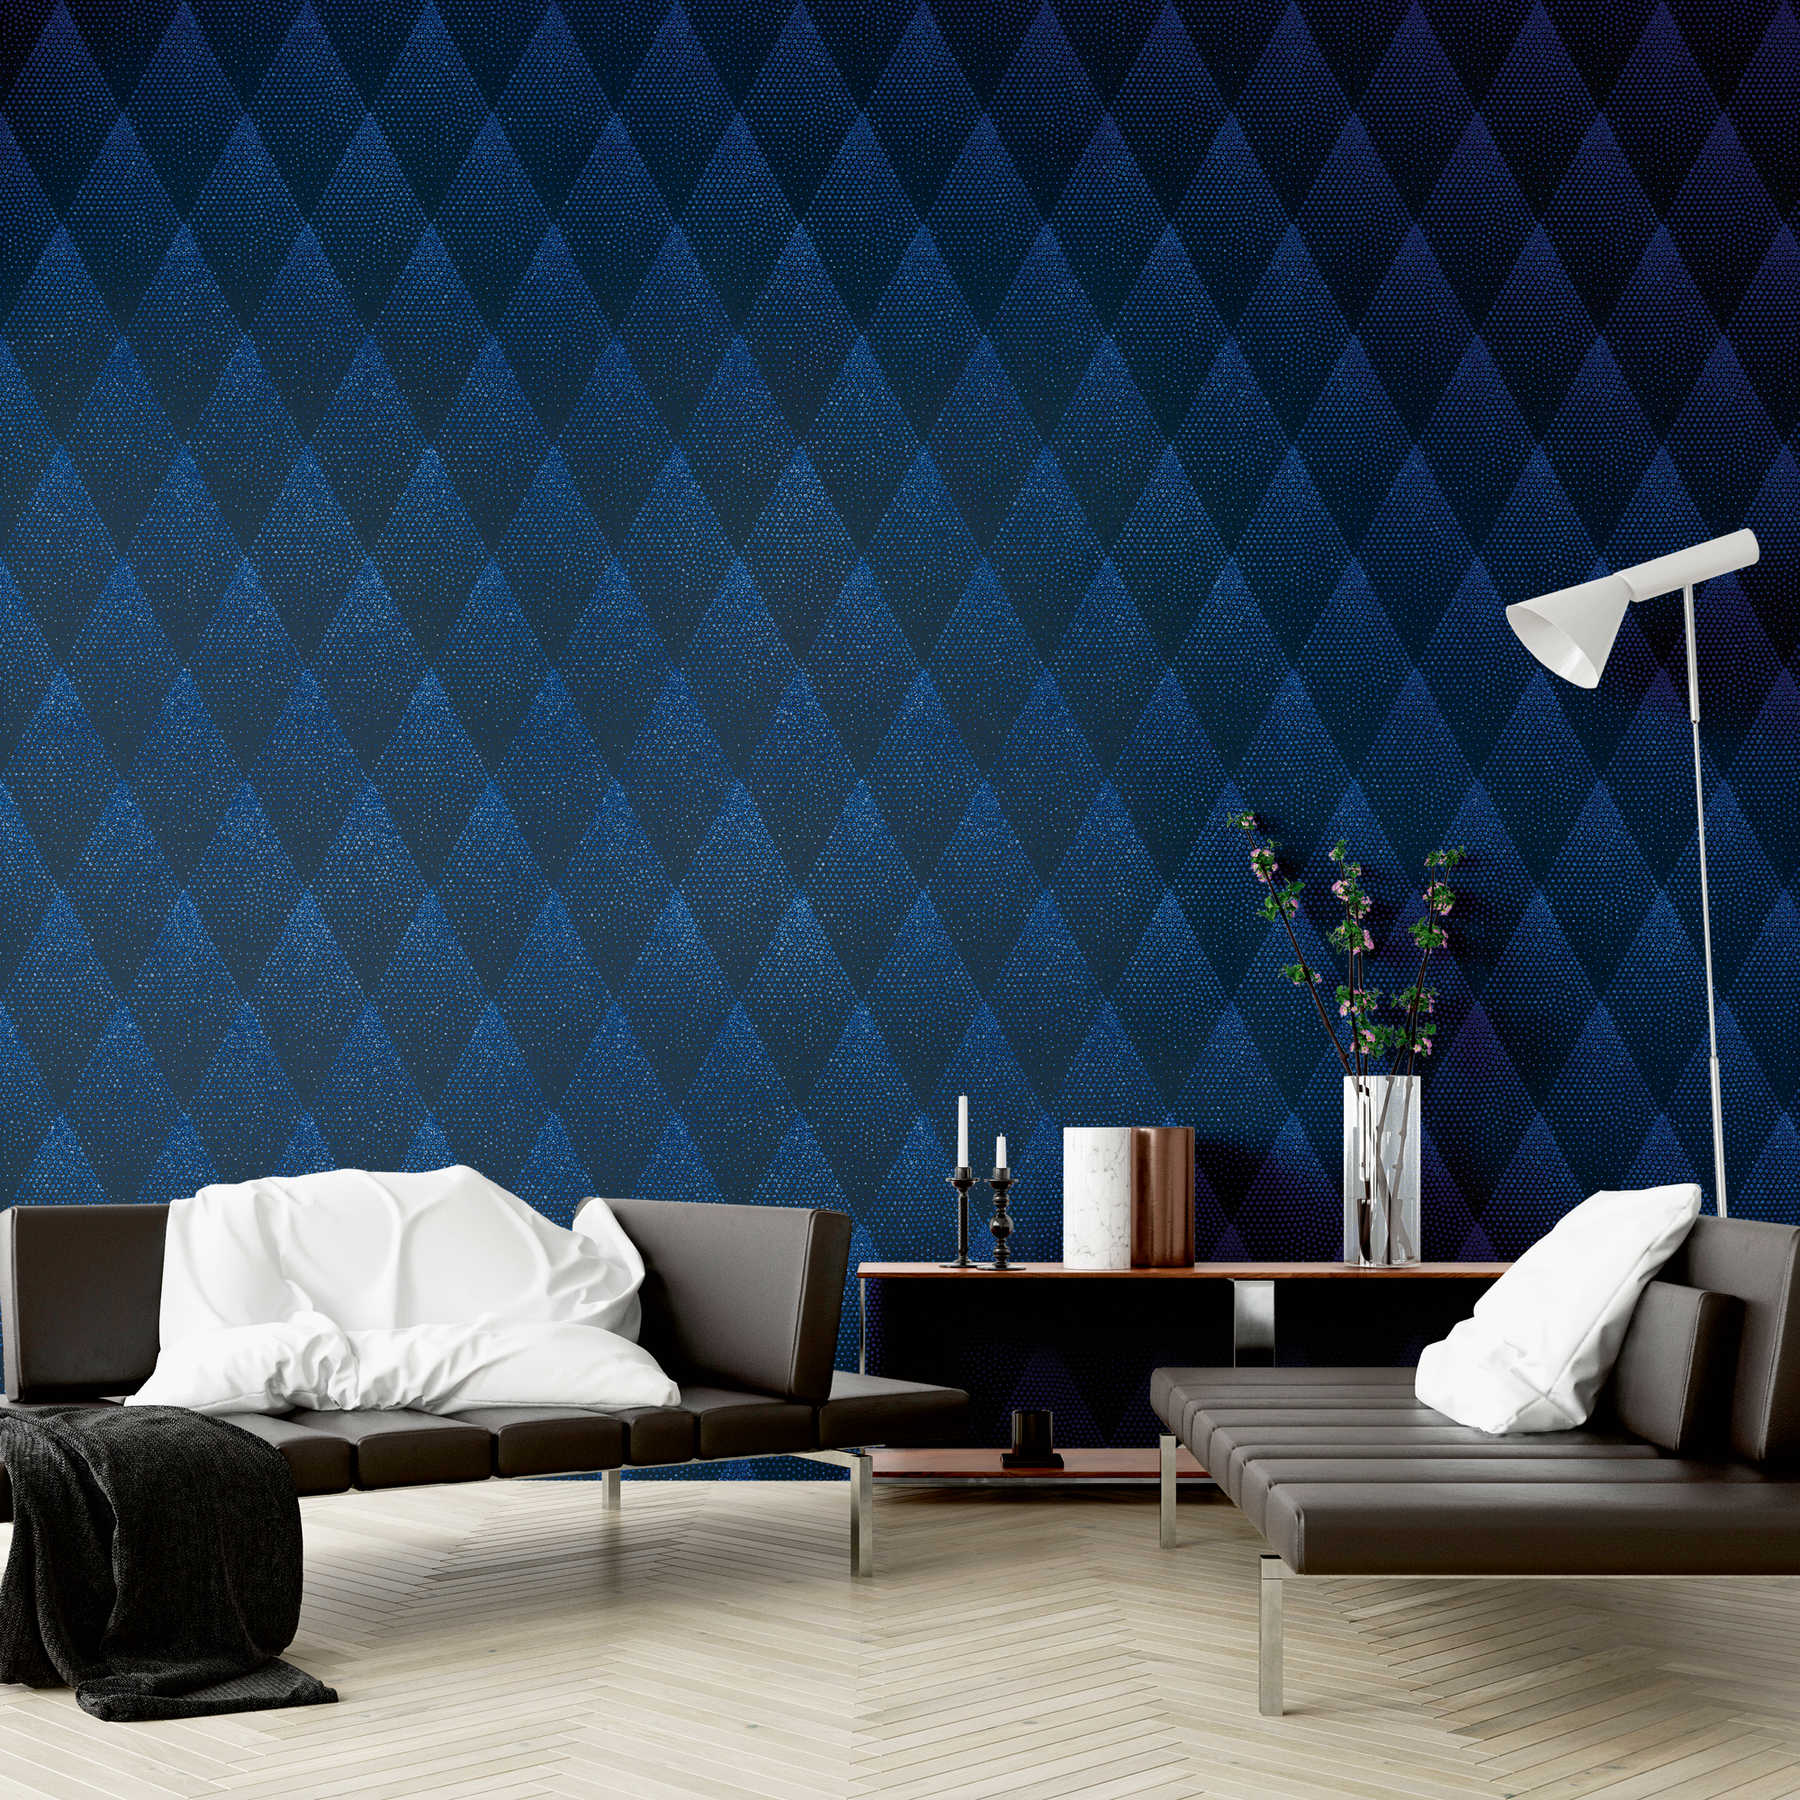             Stippen behang glitter effect in retro stijl - blauw, zwart
        